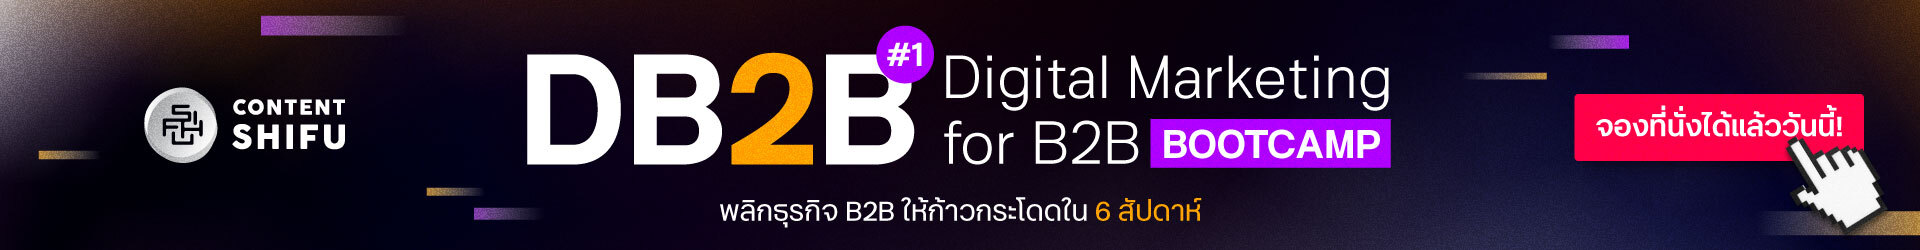 DB2B Digital Marketing for B2B Bootcamp